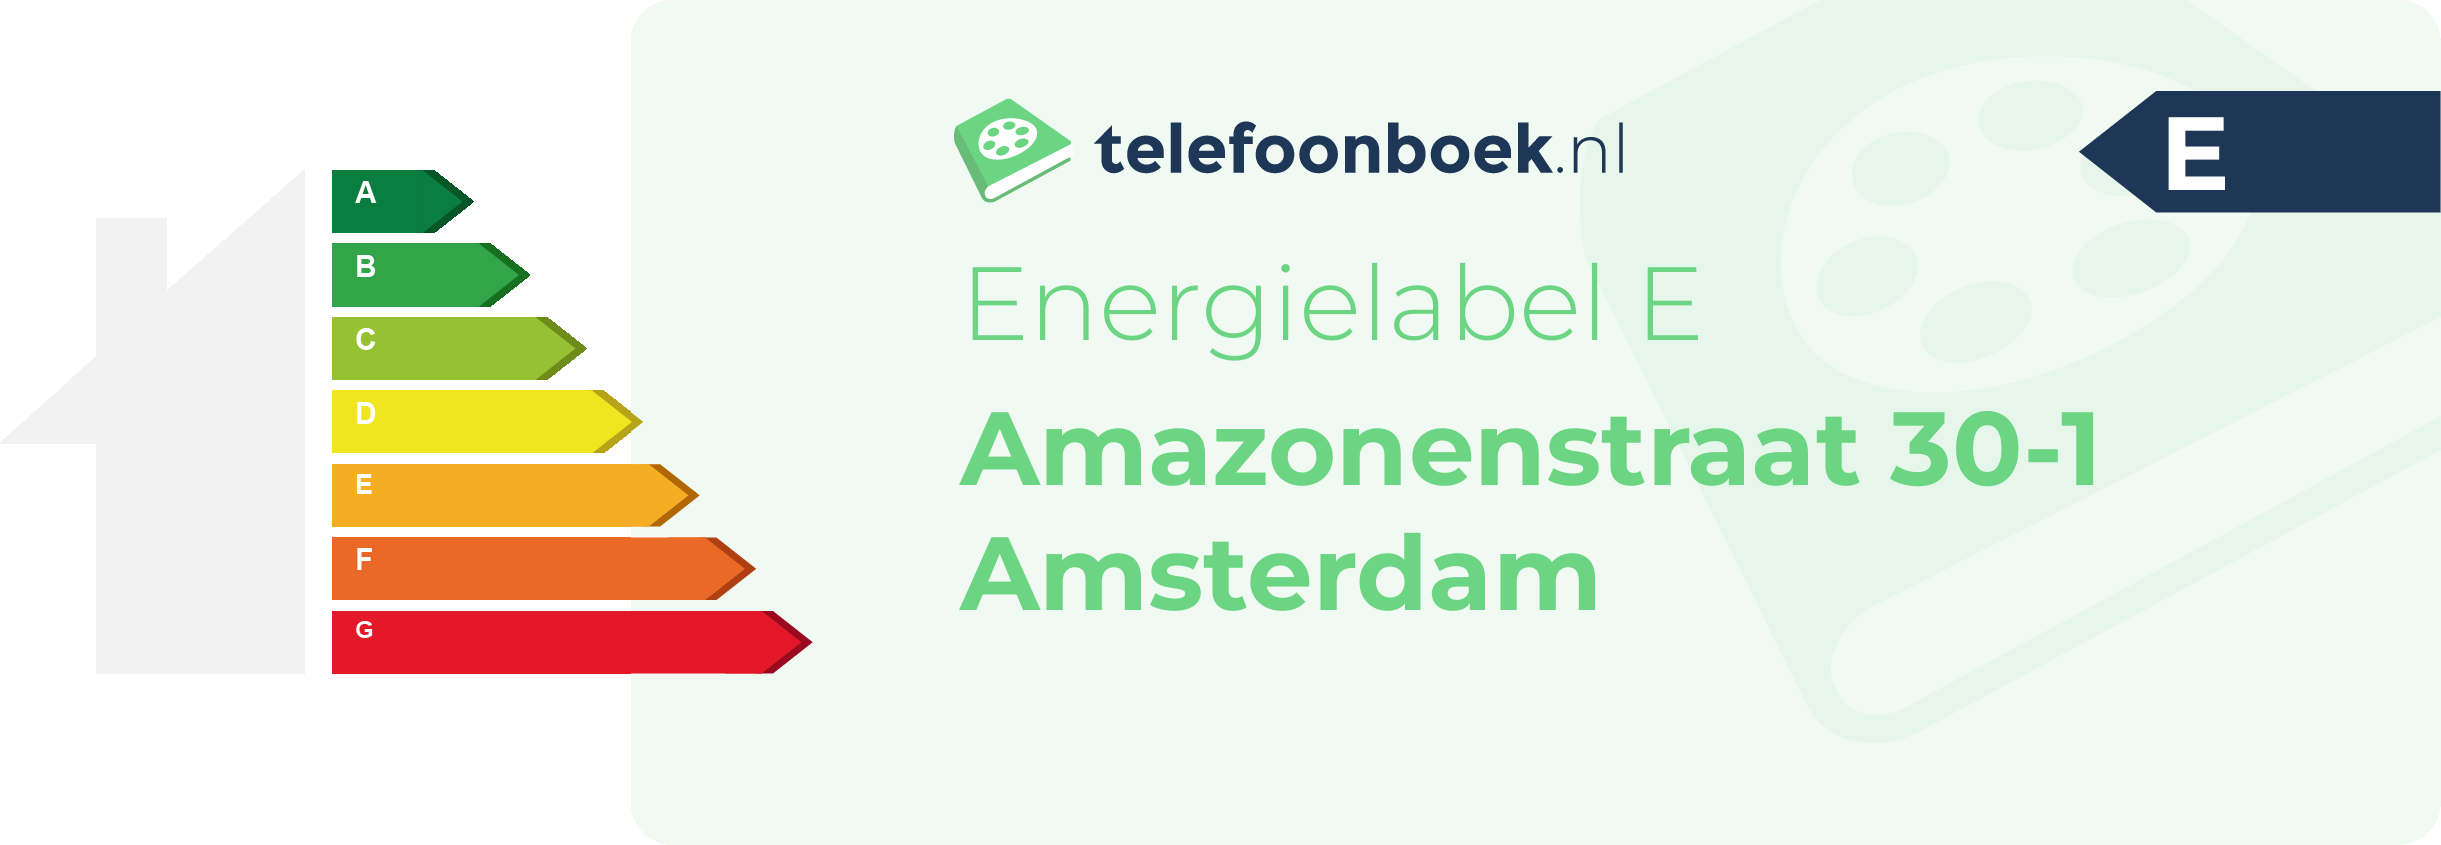 Energielabel Amazonenstraat 30-1 Amsterdam